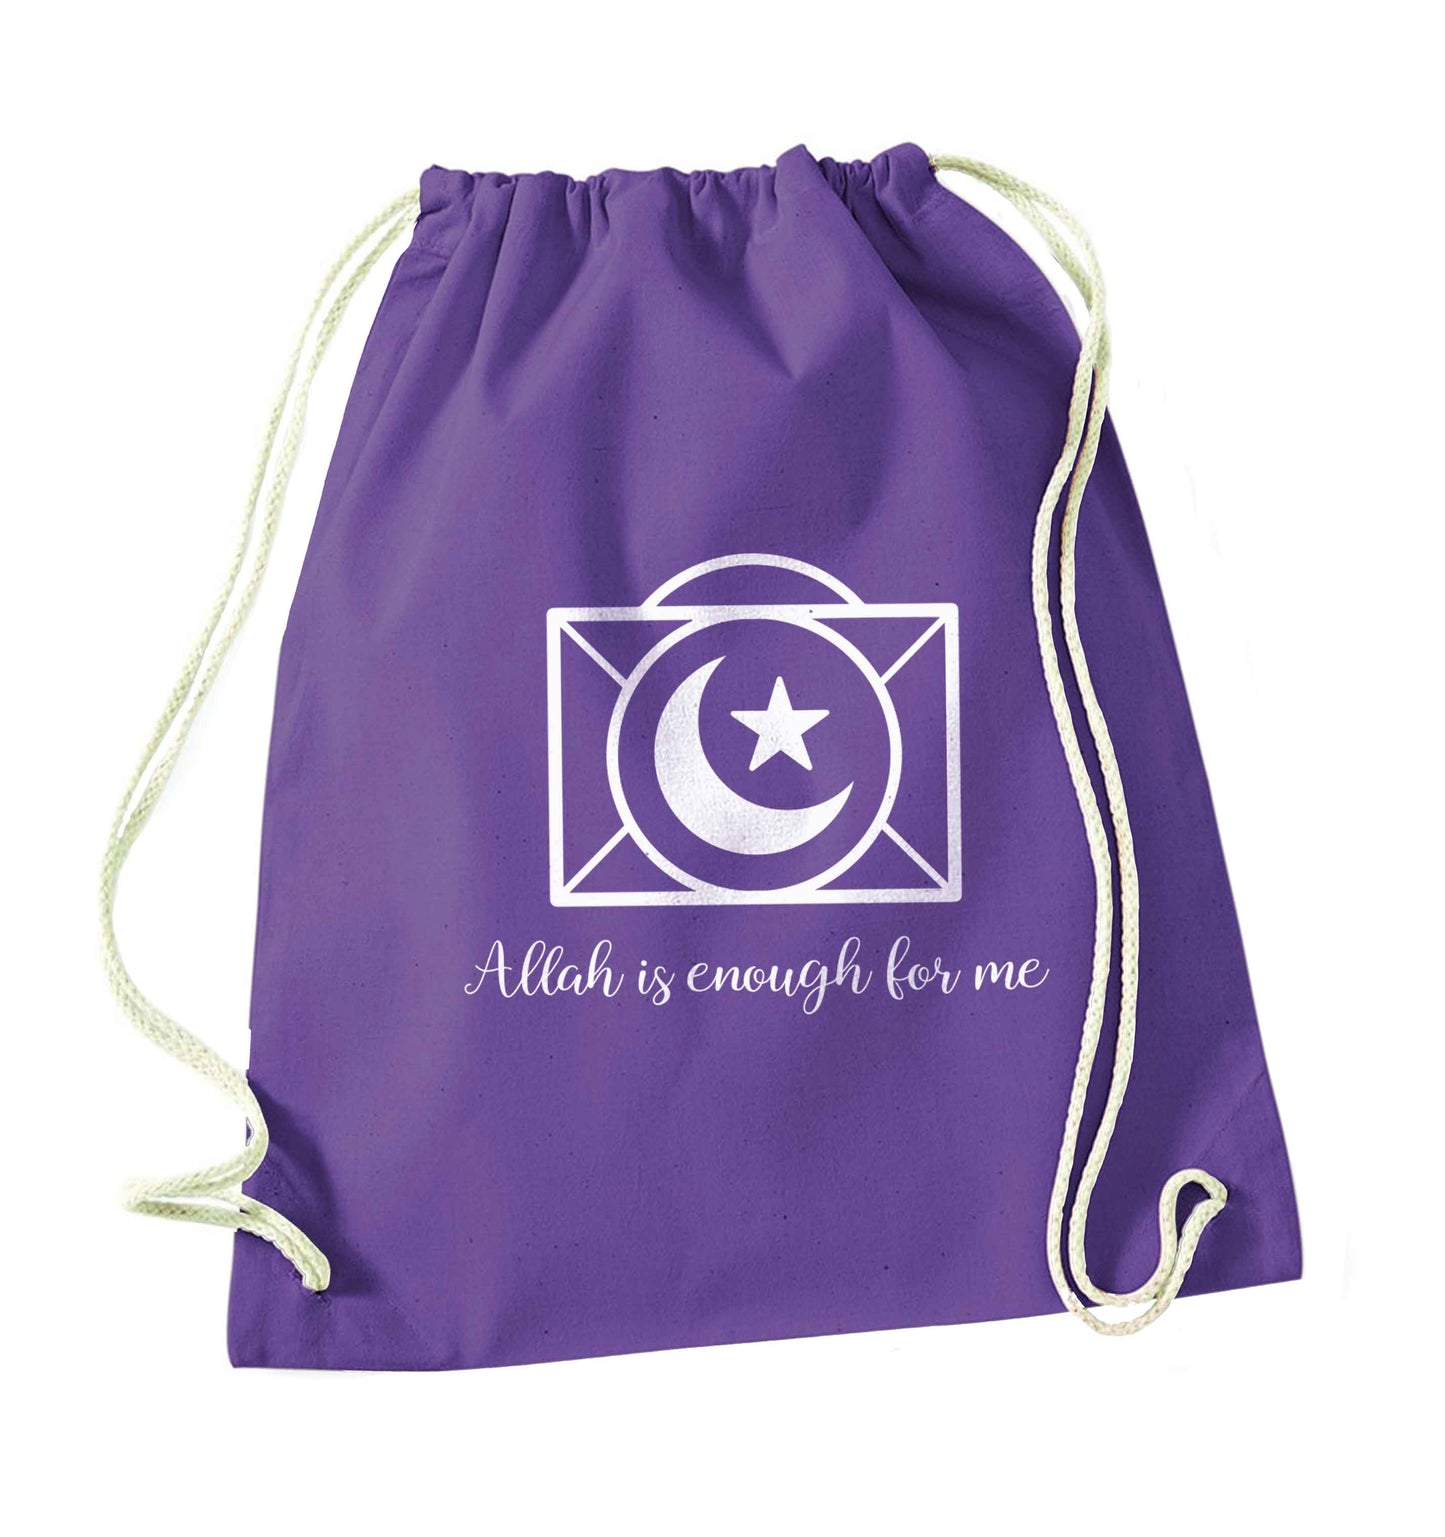 Allah is enough for me purple drawstring bag